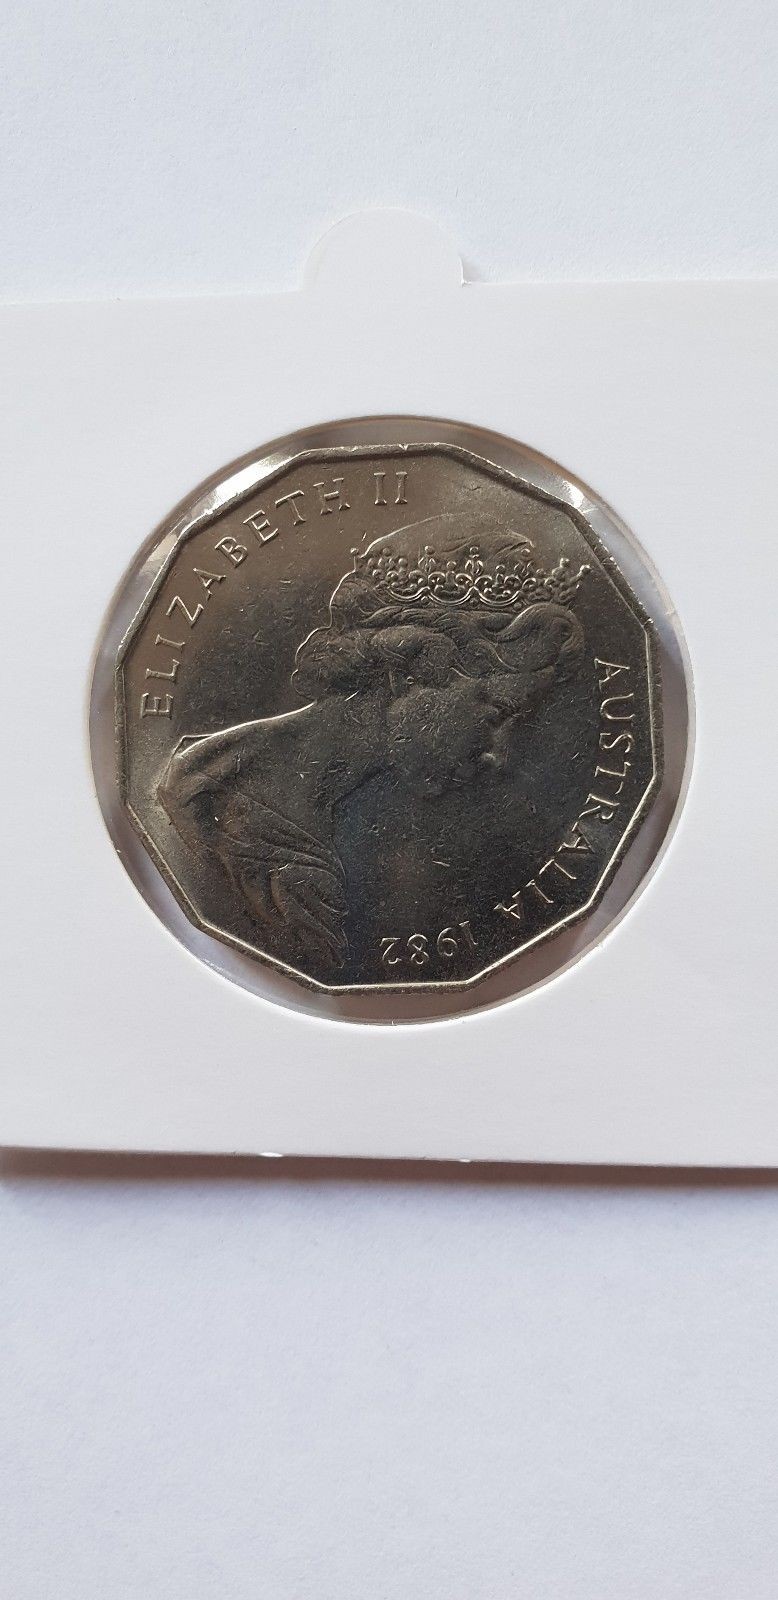 Australian 50c Coin, for 'Brisbane Commonwealth Games', c.1982